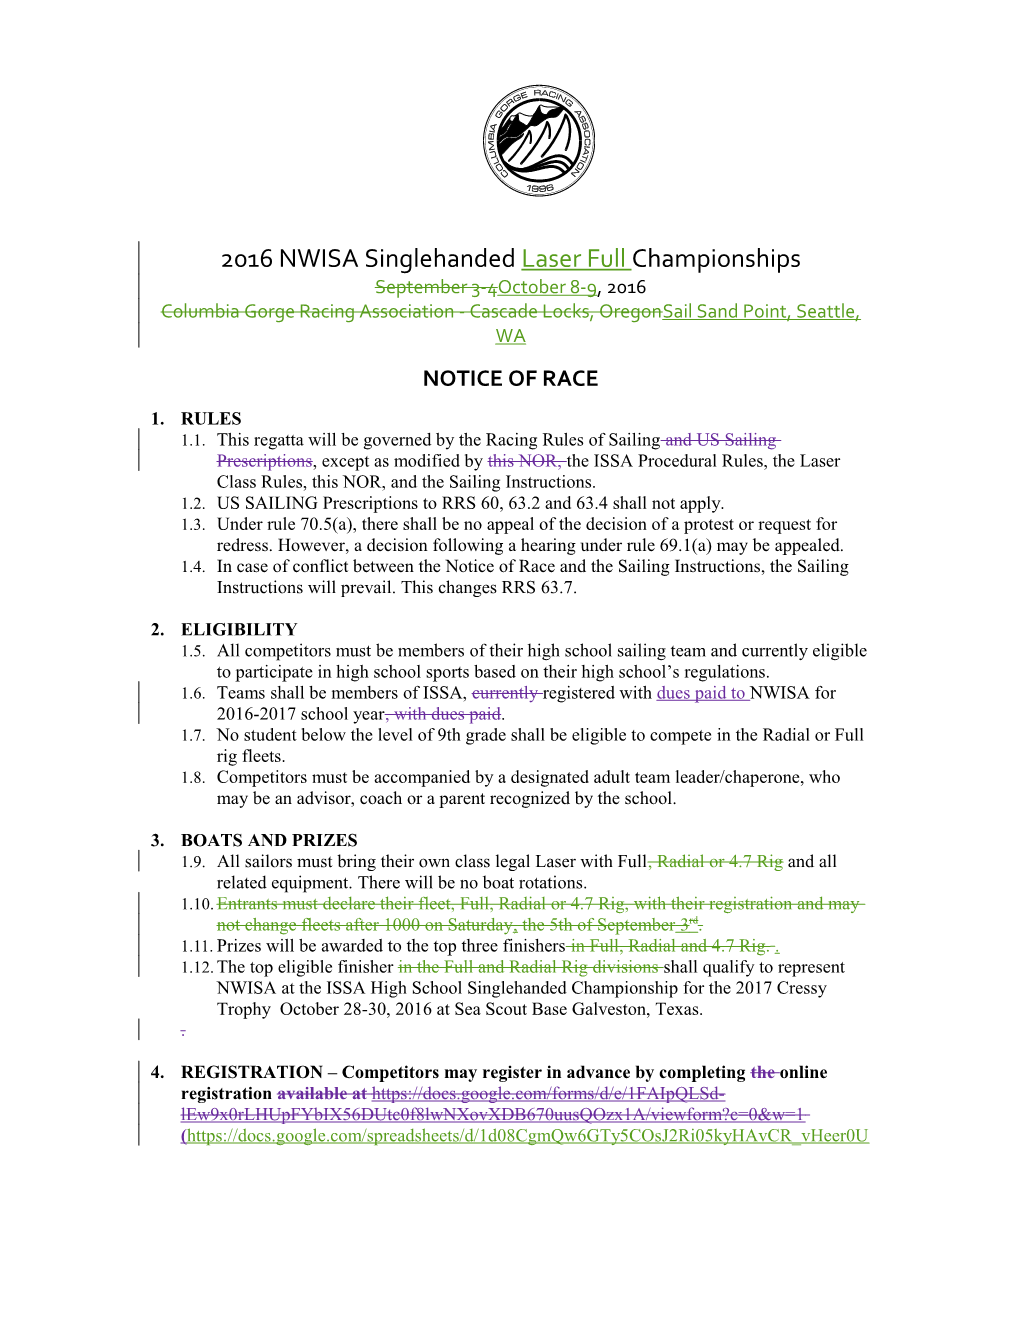 NWISA Singlehand District Championship